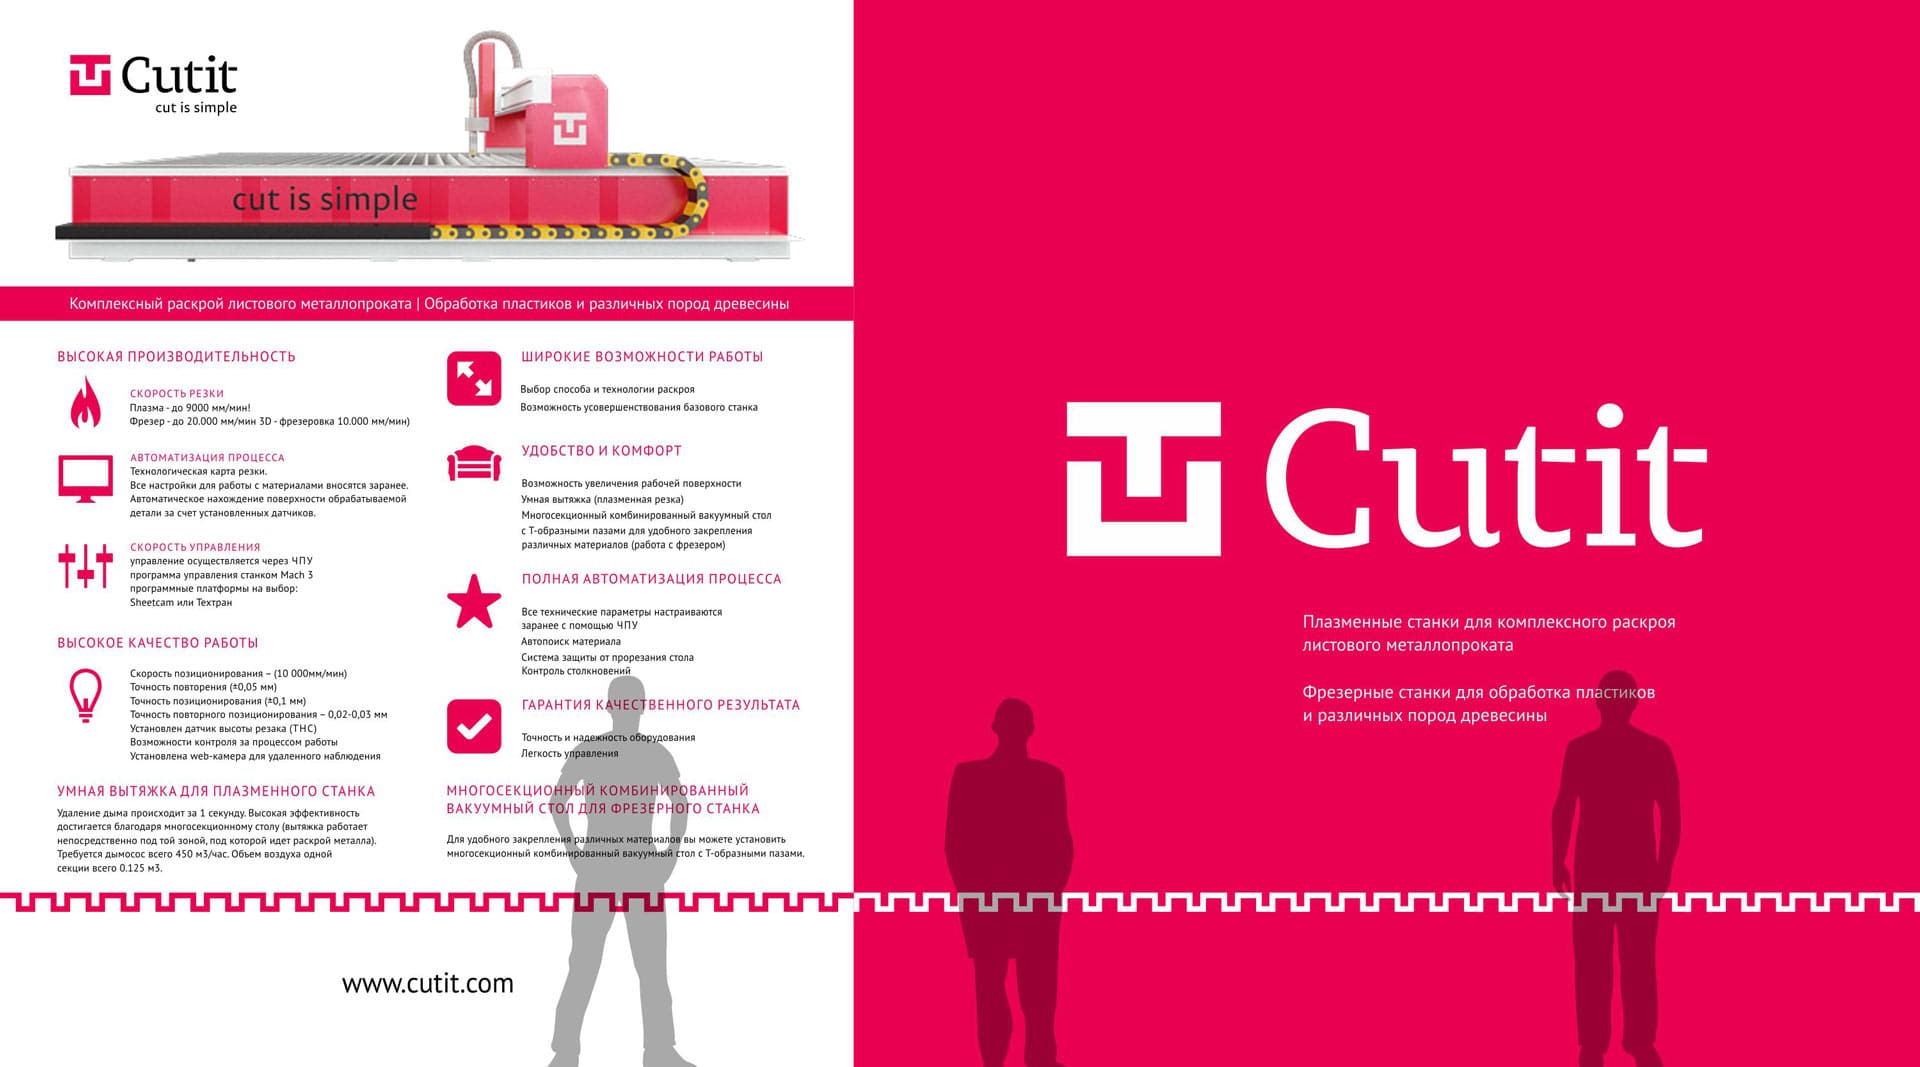 Artjuice.ru | Cutit. Cut is simple!